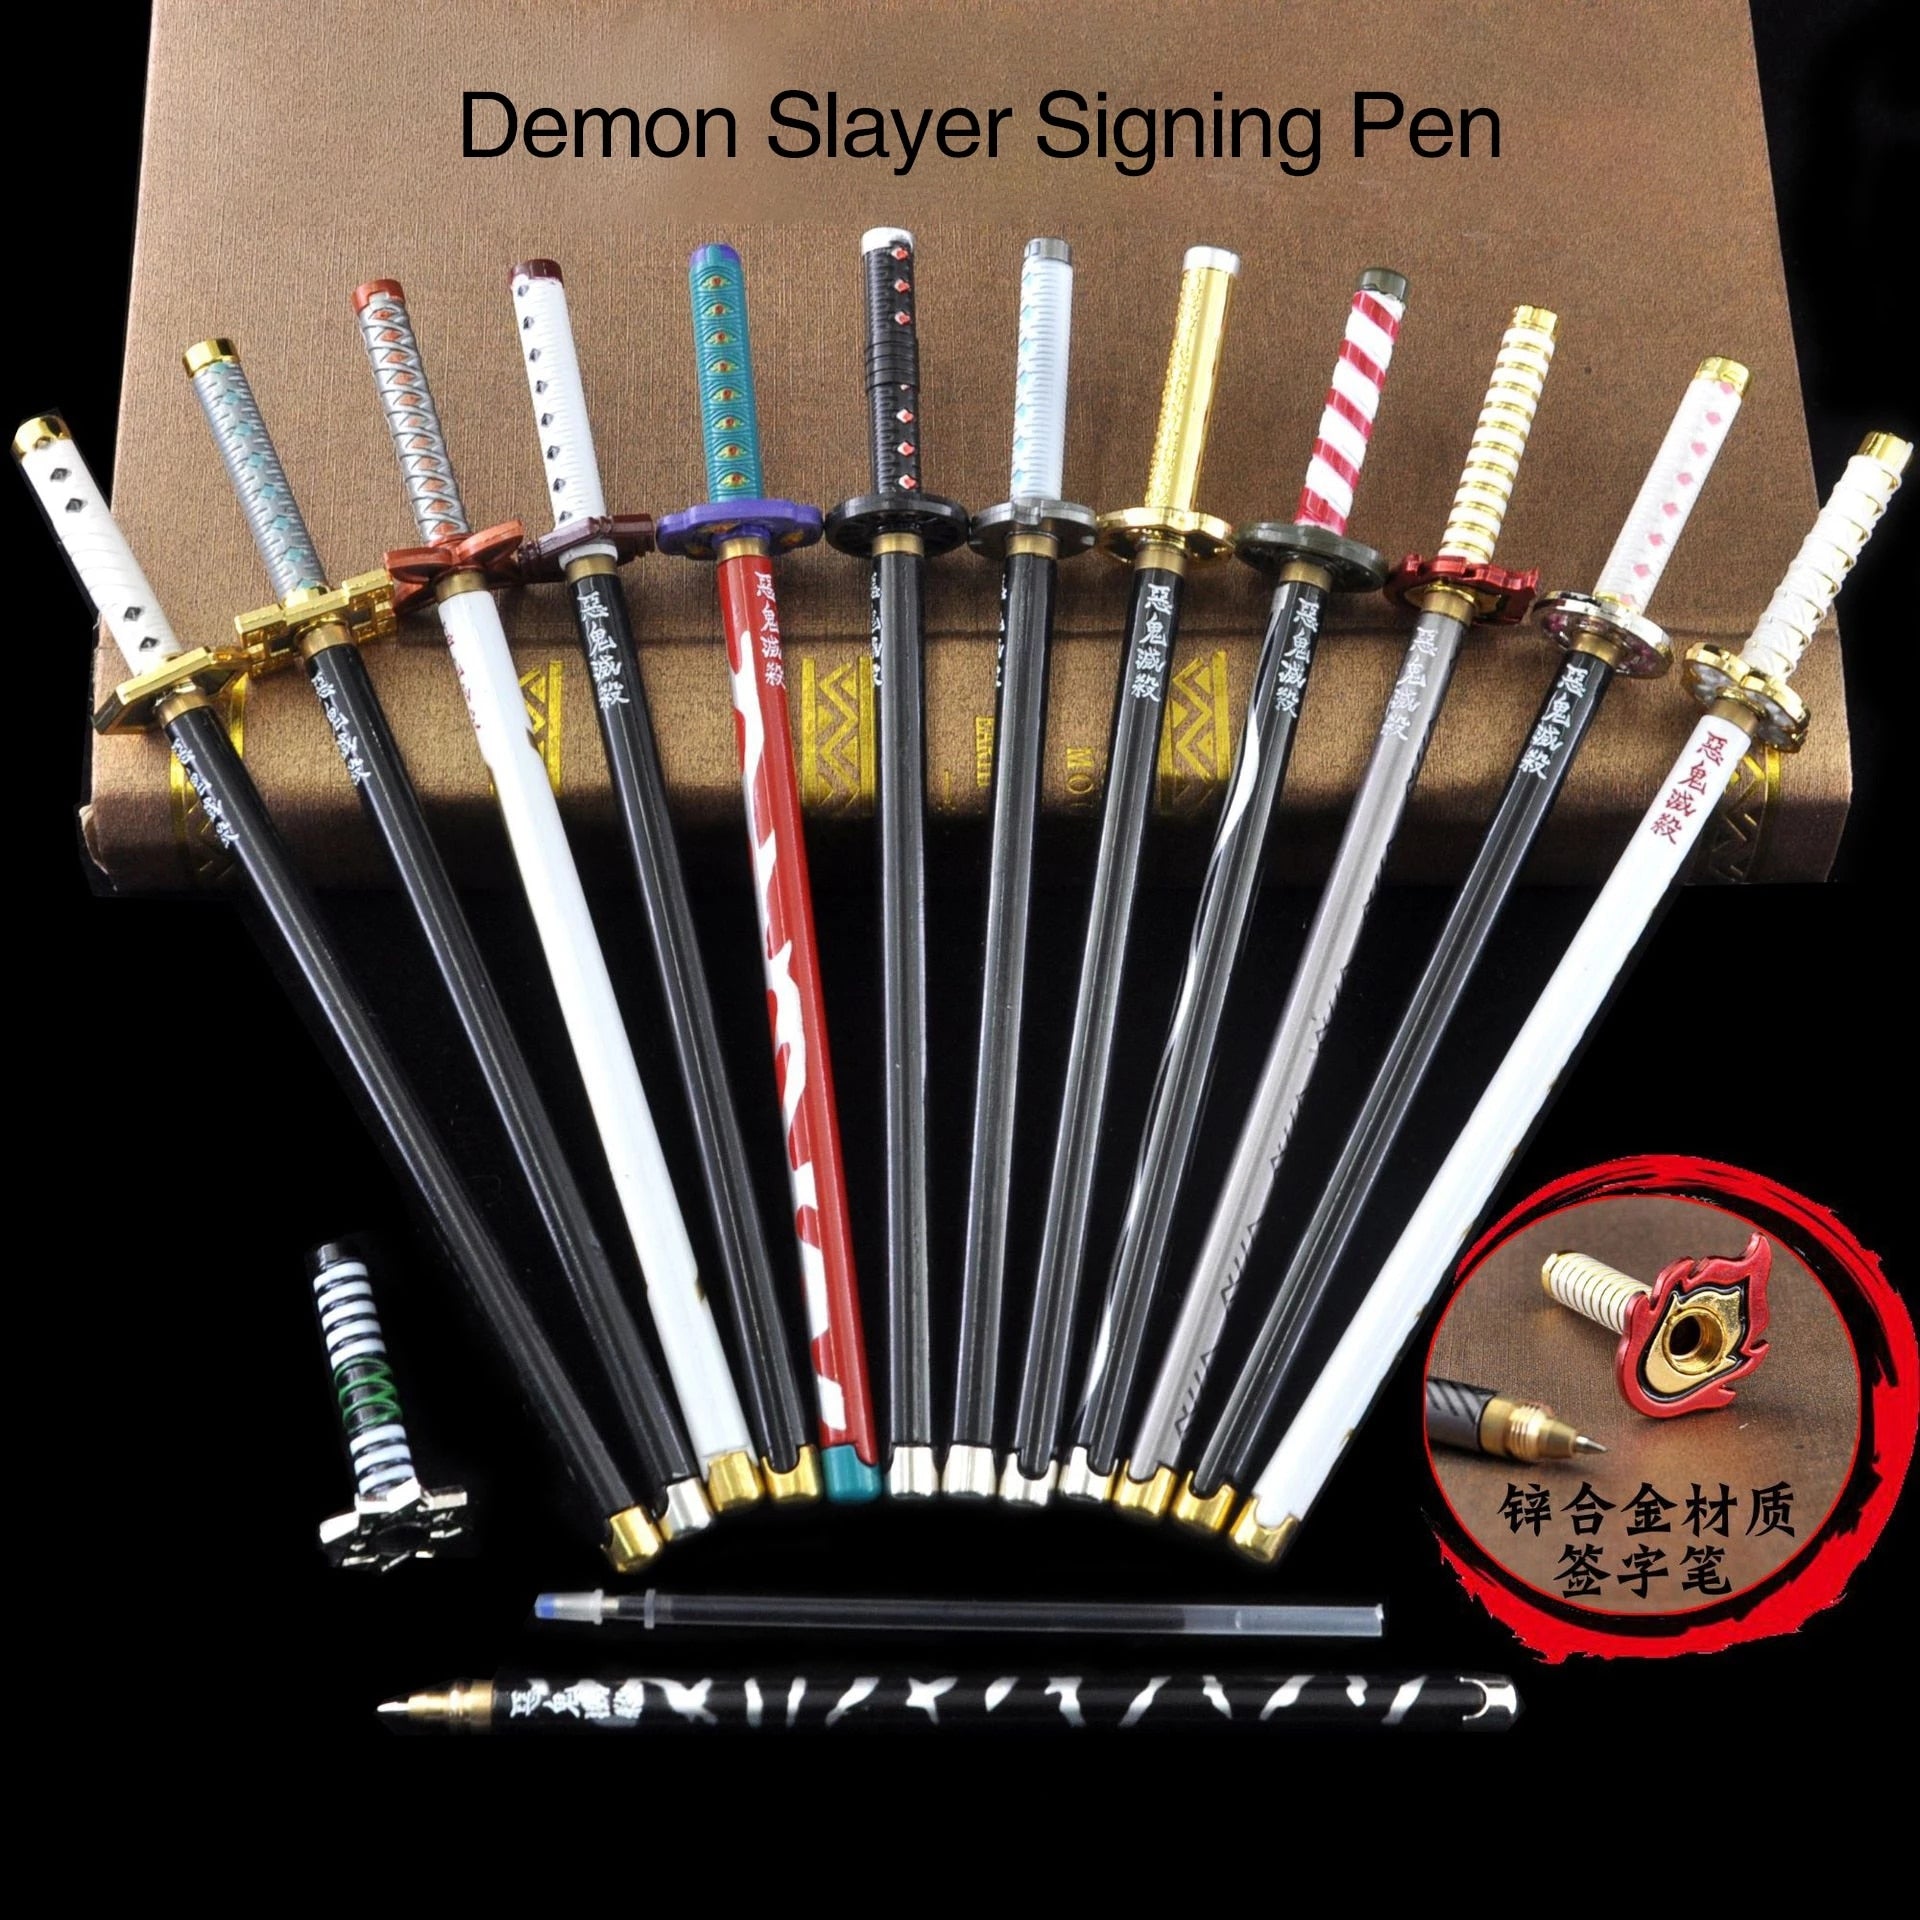 Demon Slayer Sword Pen